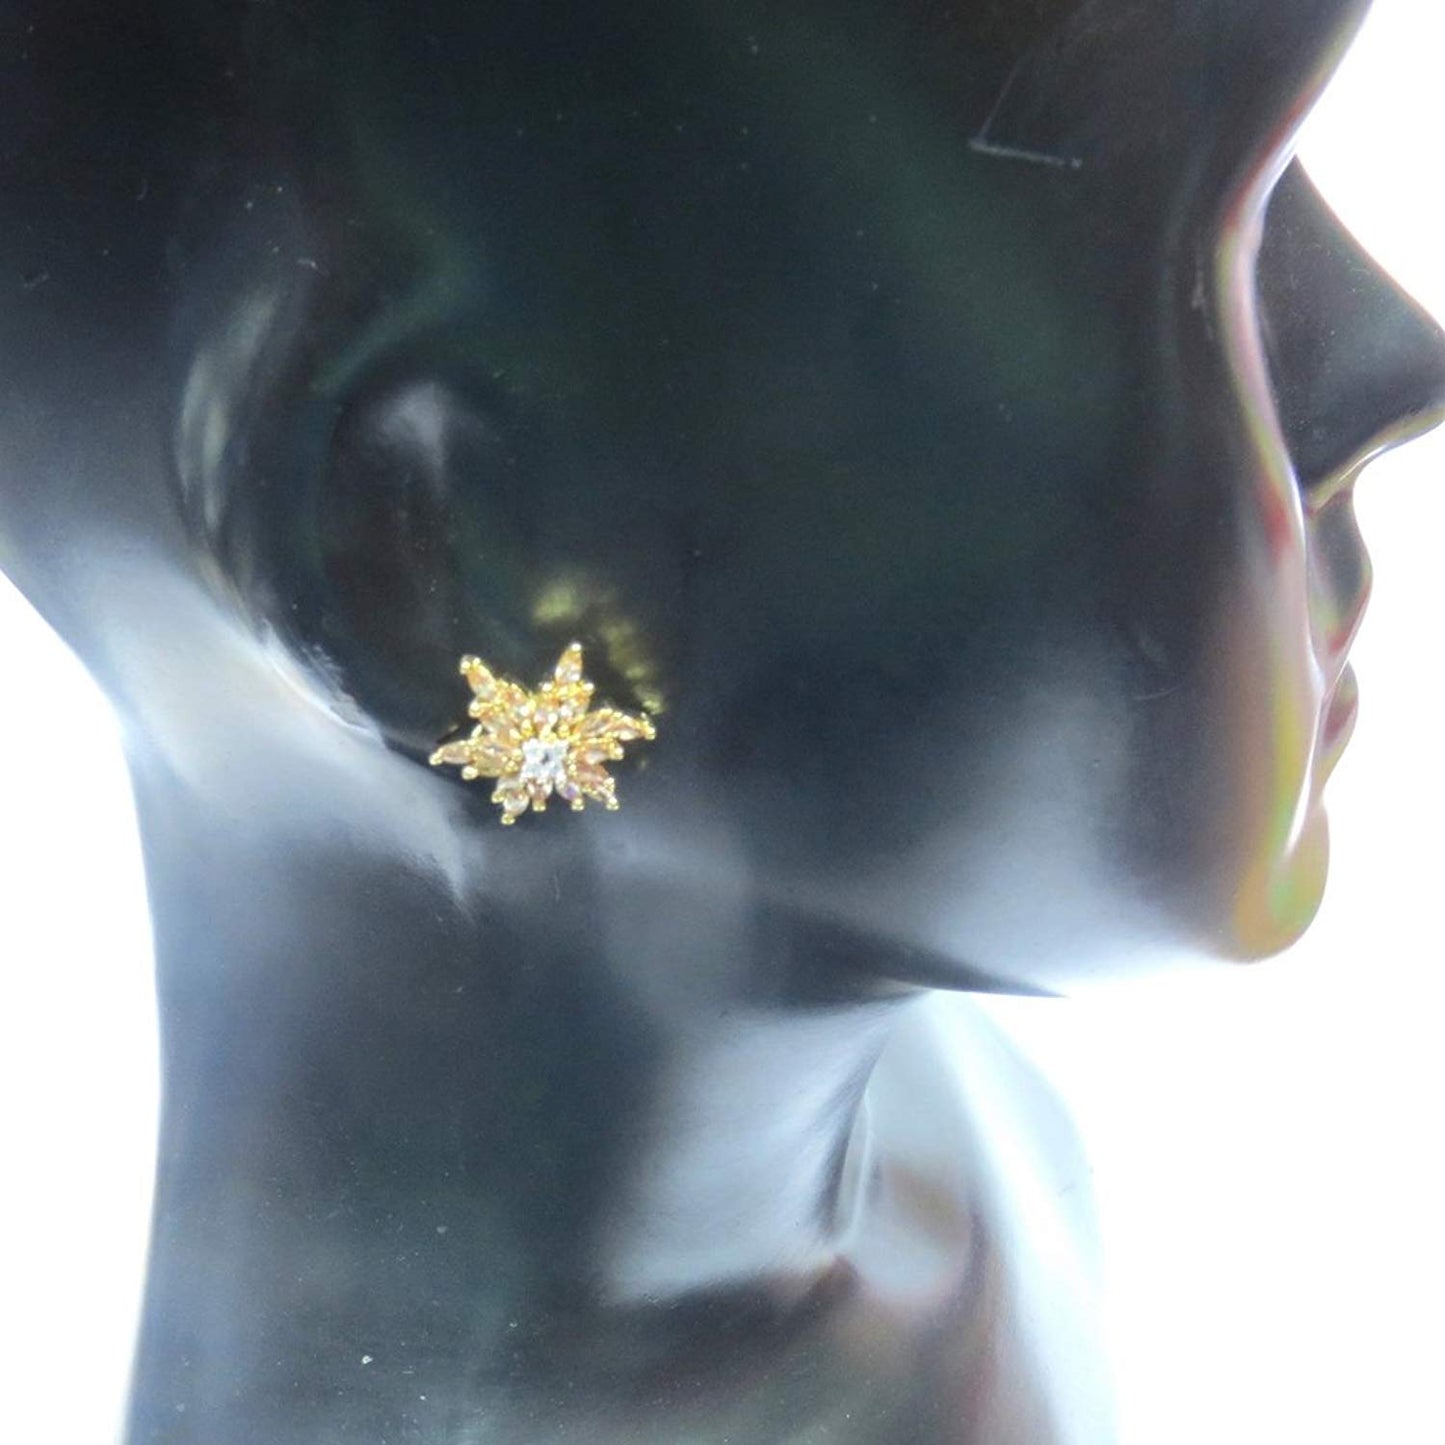 Jewelshingar Jewellery Fine Gold Plated Stud Earrings For Girls ( 35104-gjt )